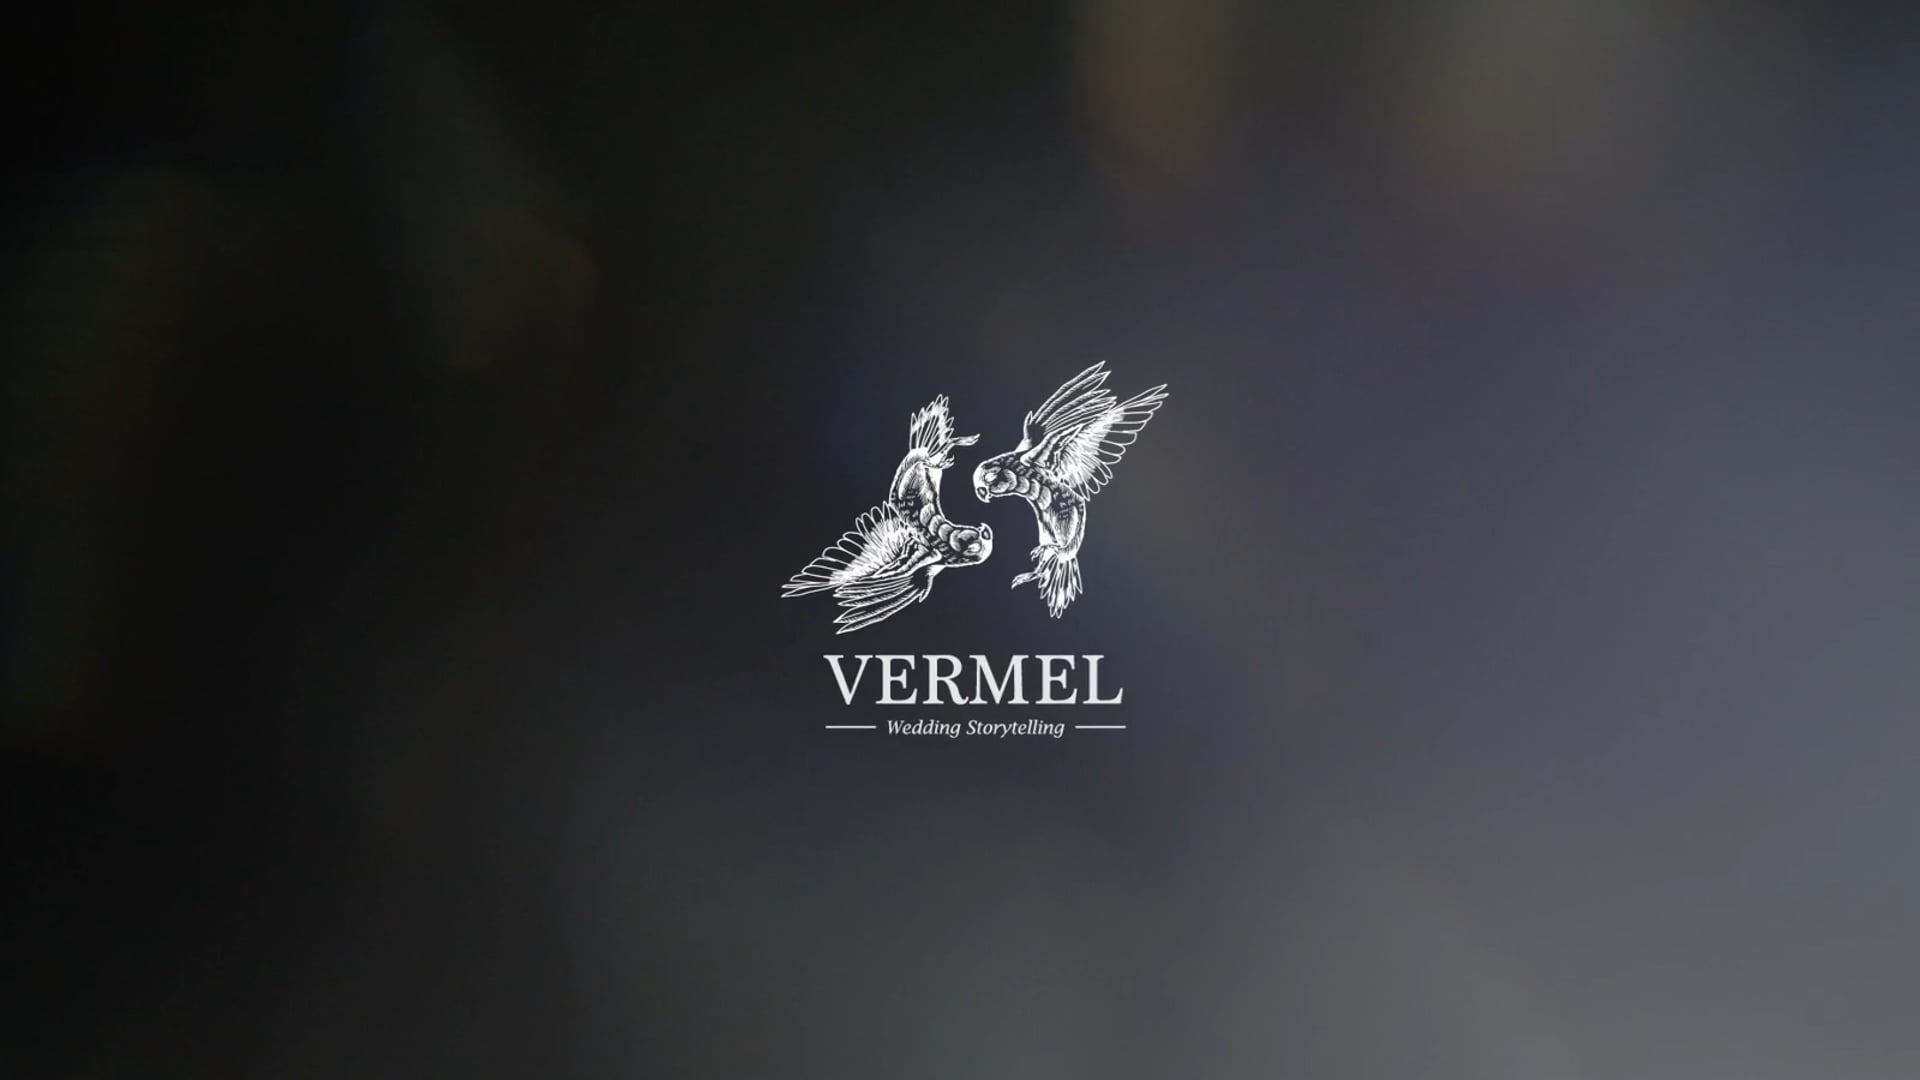 Vermel - DEMOREEL 2017